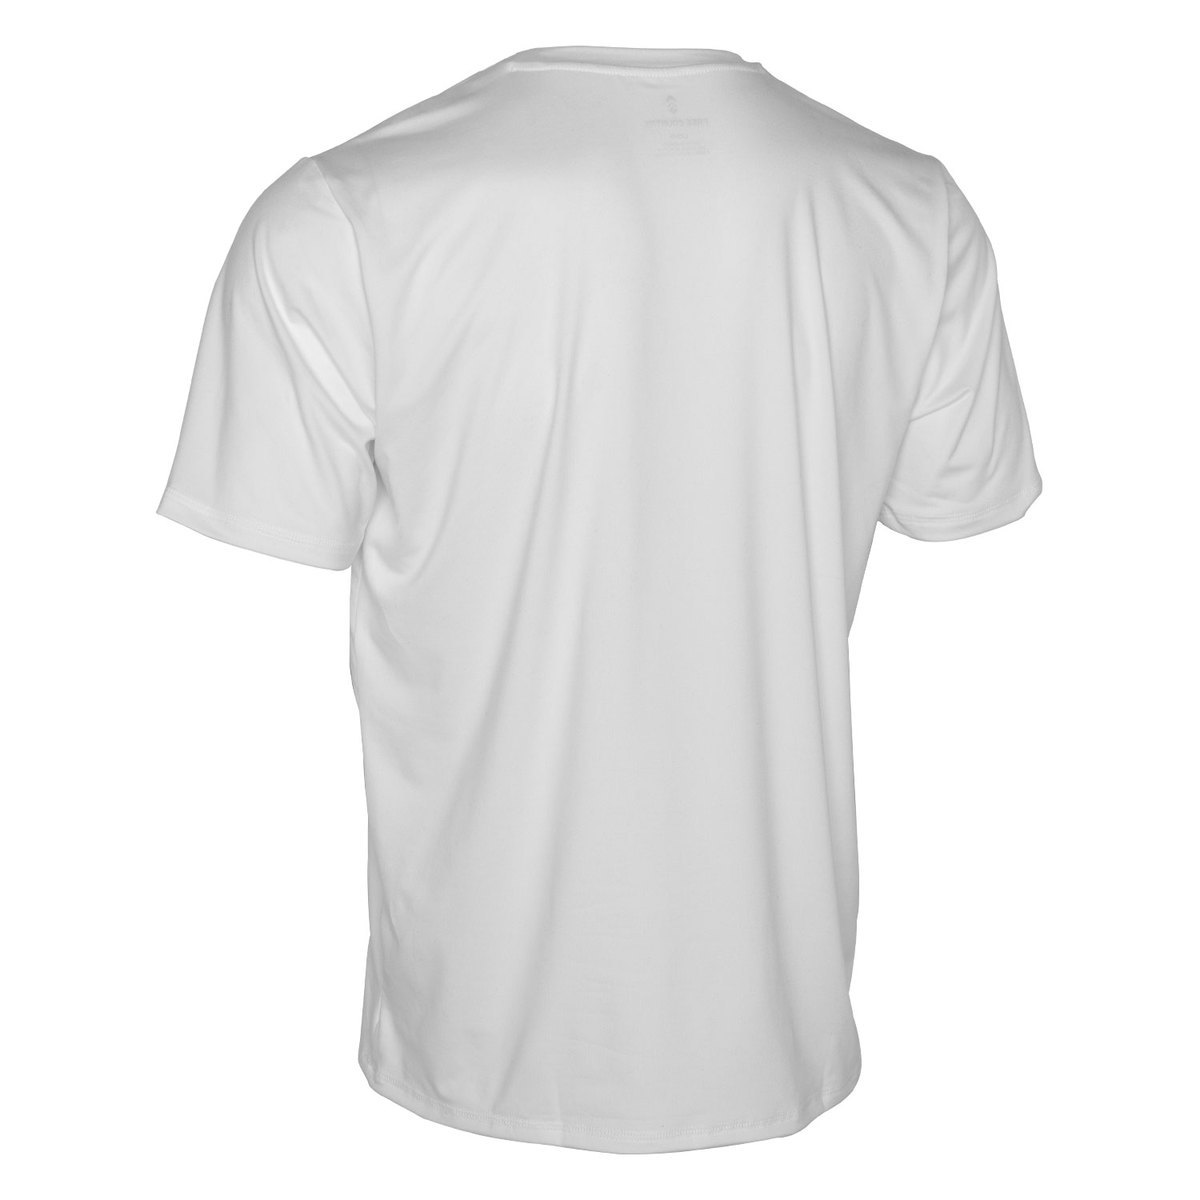 Free Country Men's Microtech Short Sleeve Shirt - White - XXL - White ...